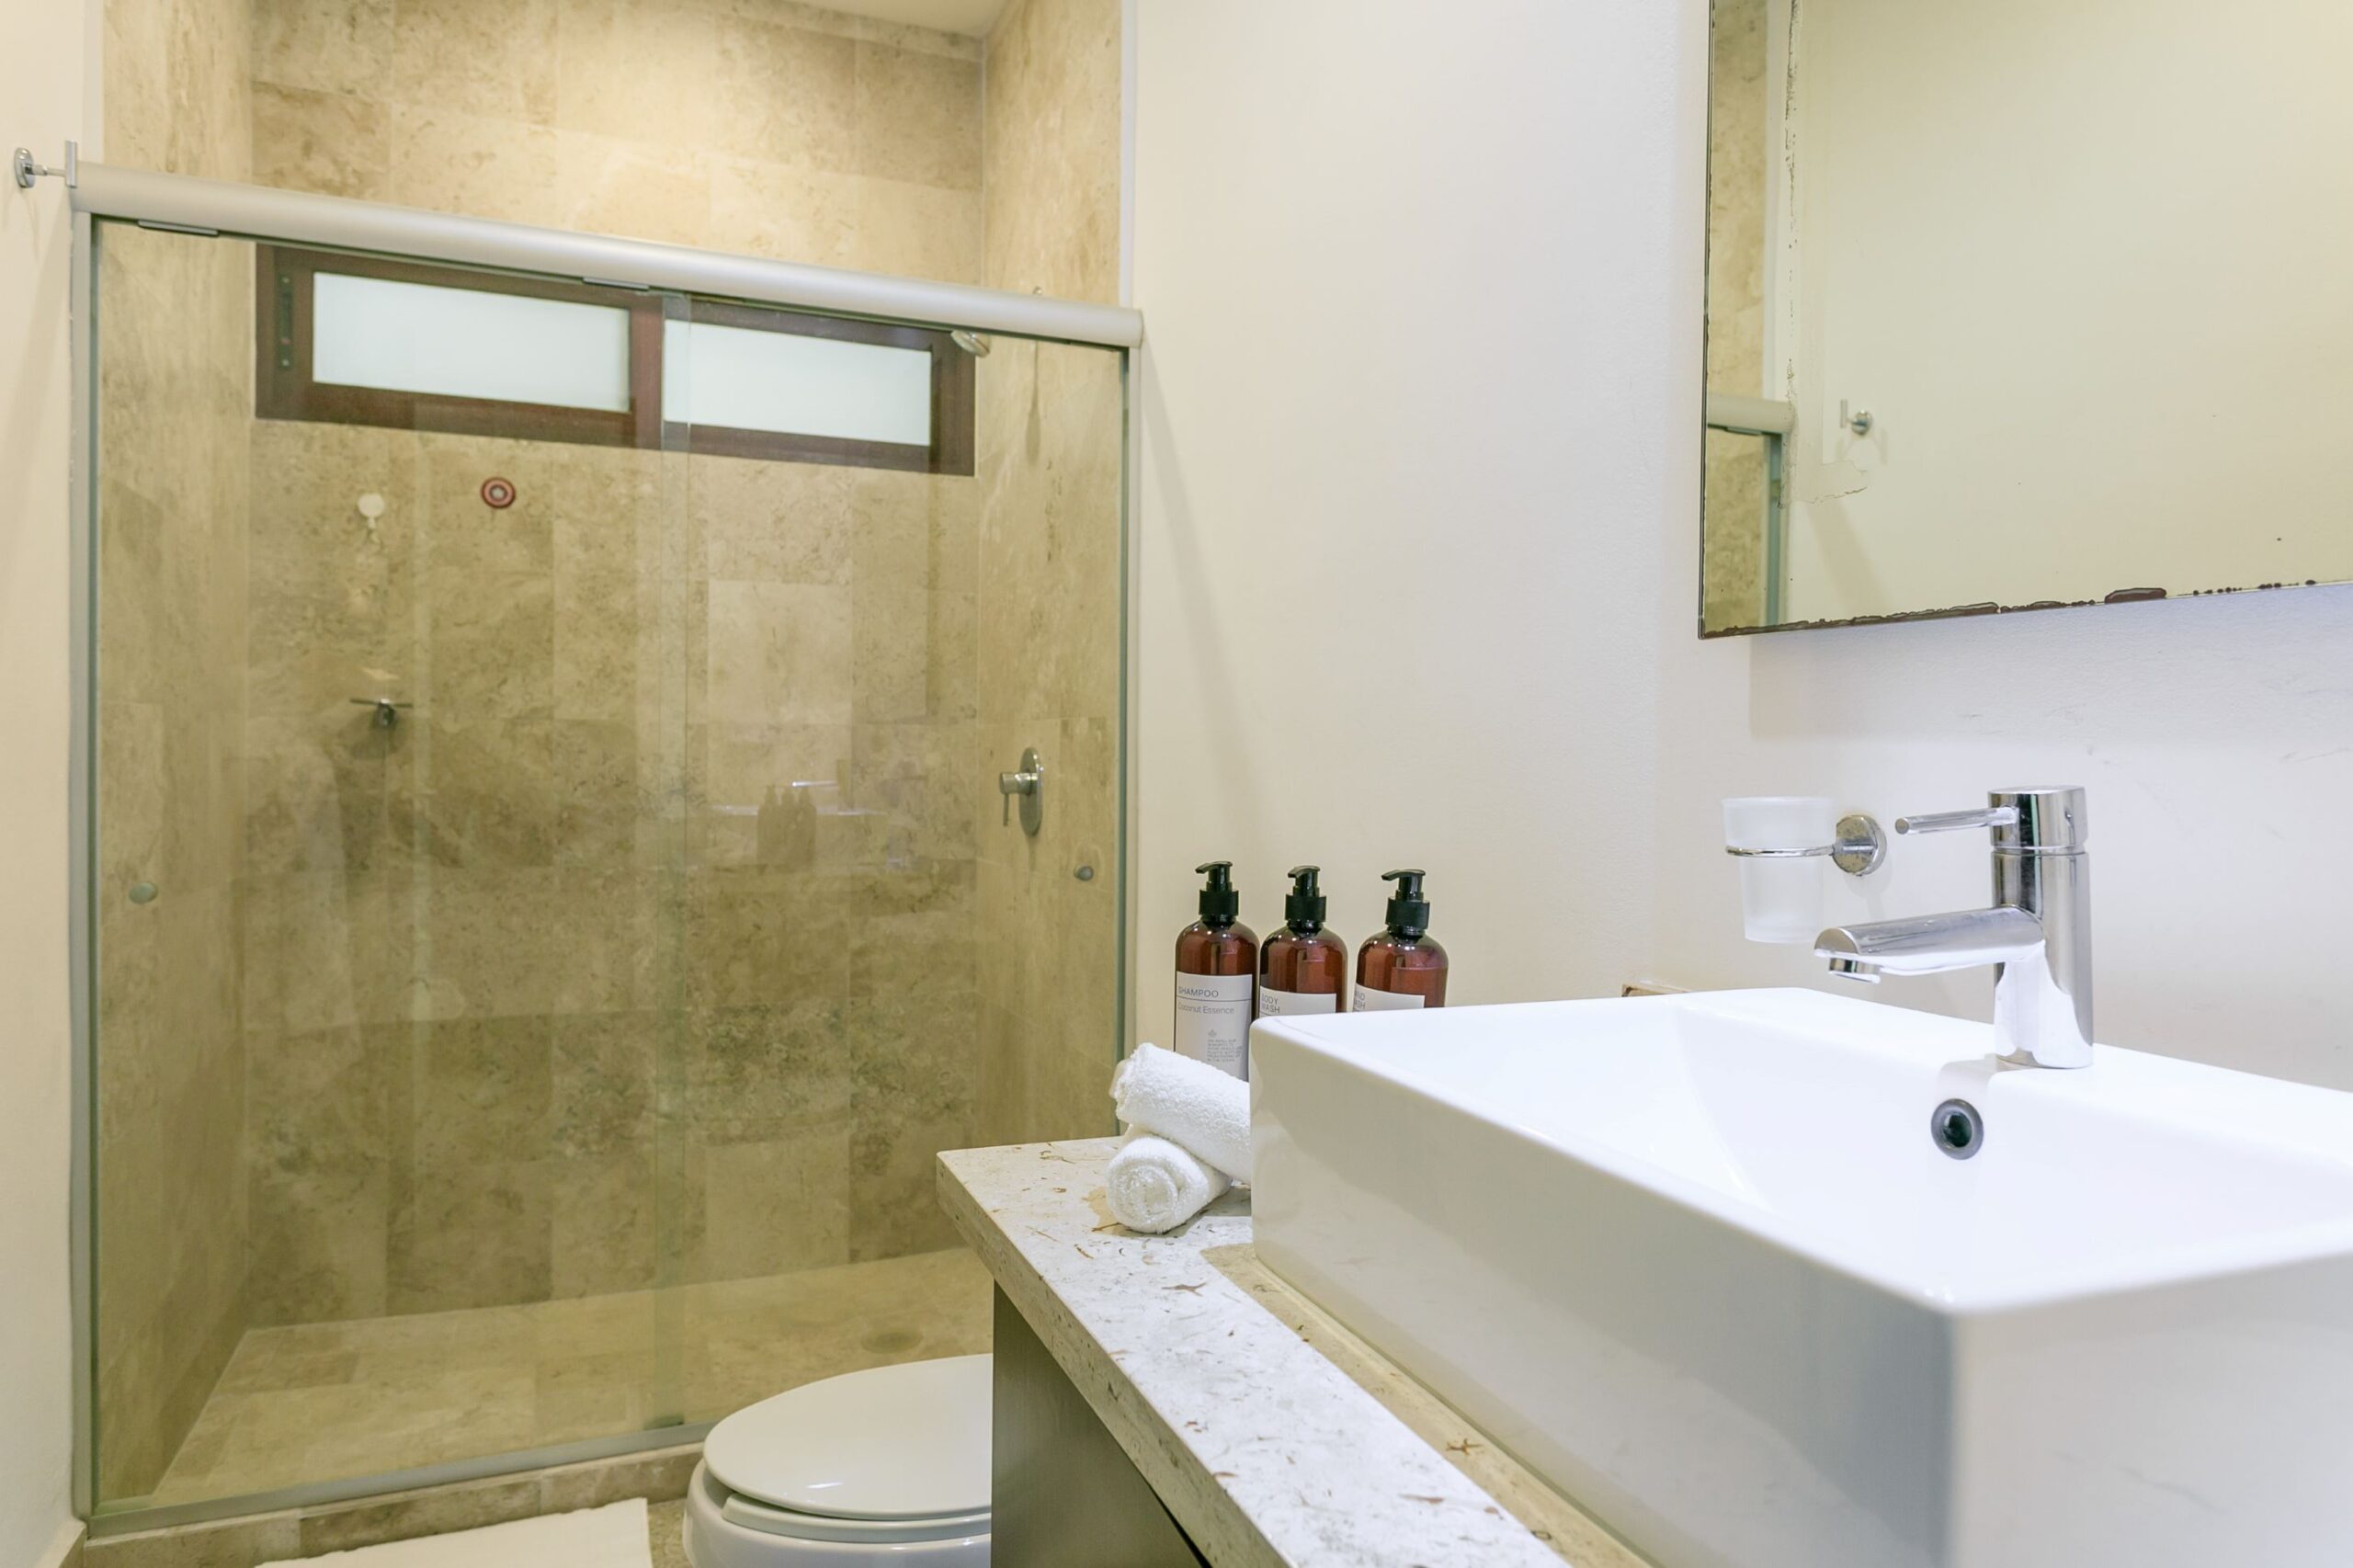 m playacar real estate akoya condo bathroom with shower